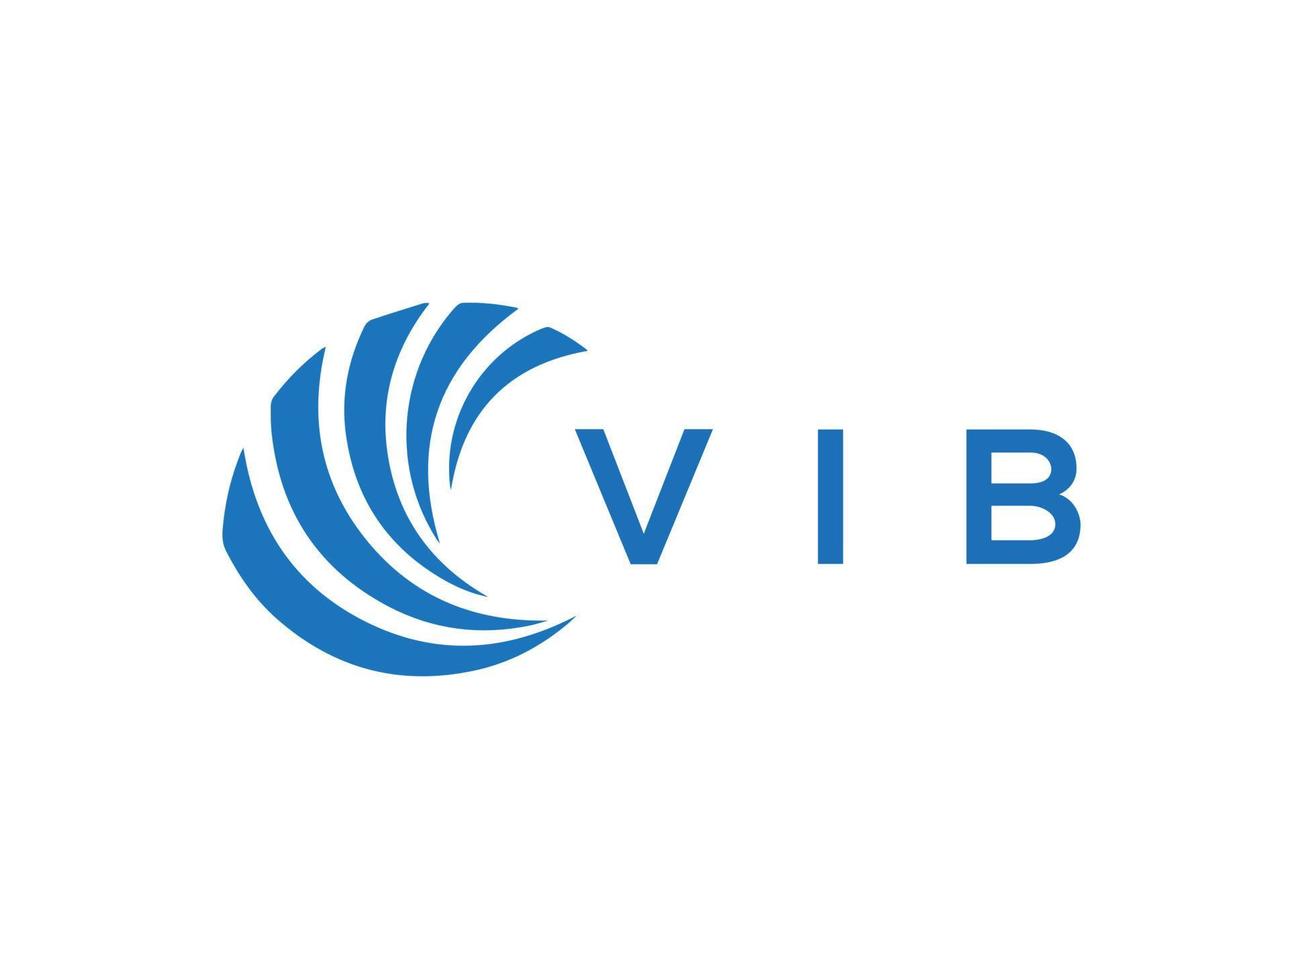 VIB letter logo design on white background. VIB creative circle